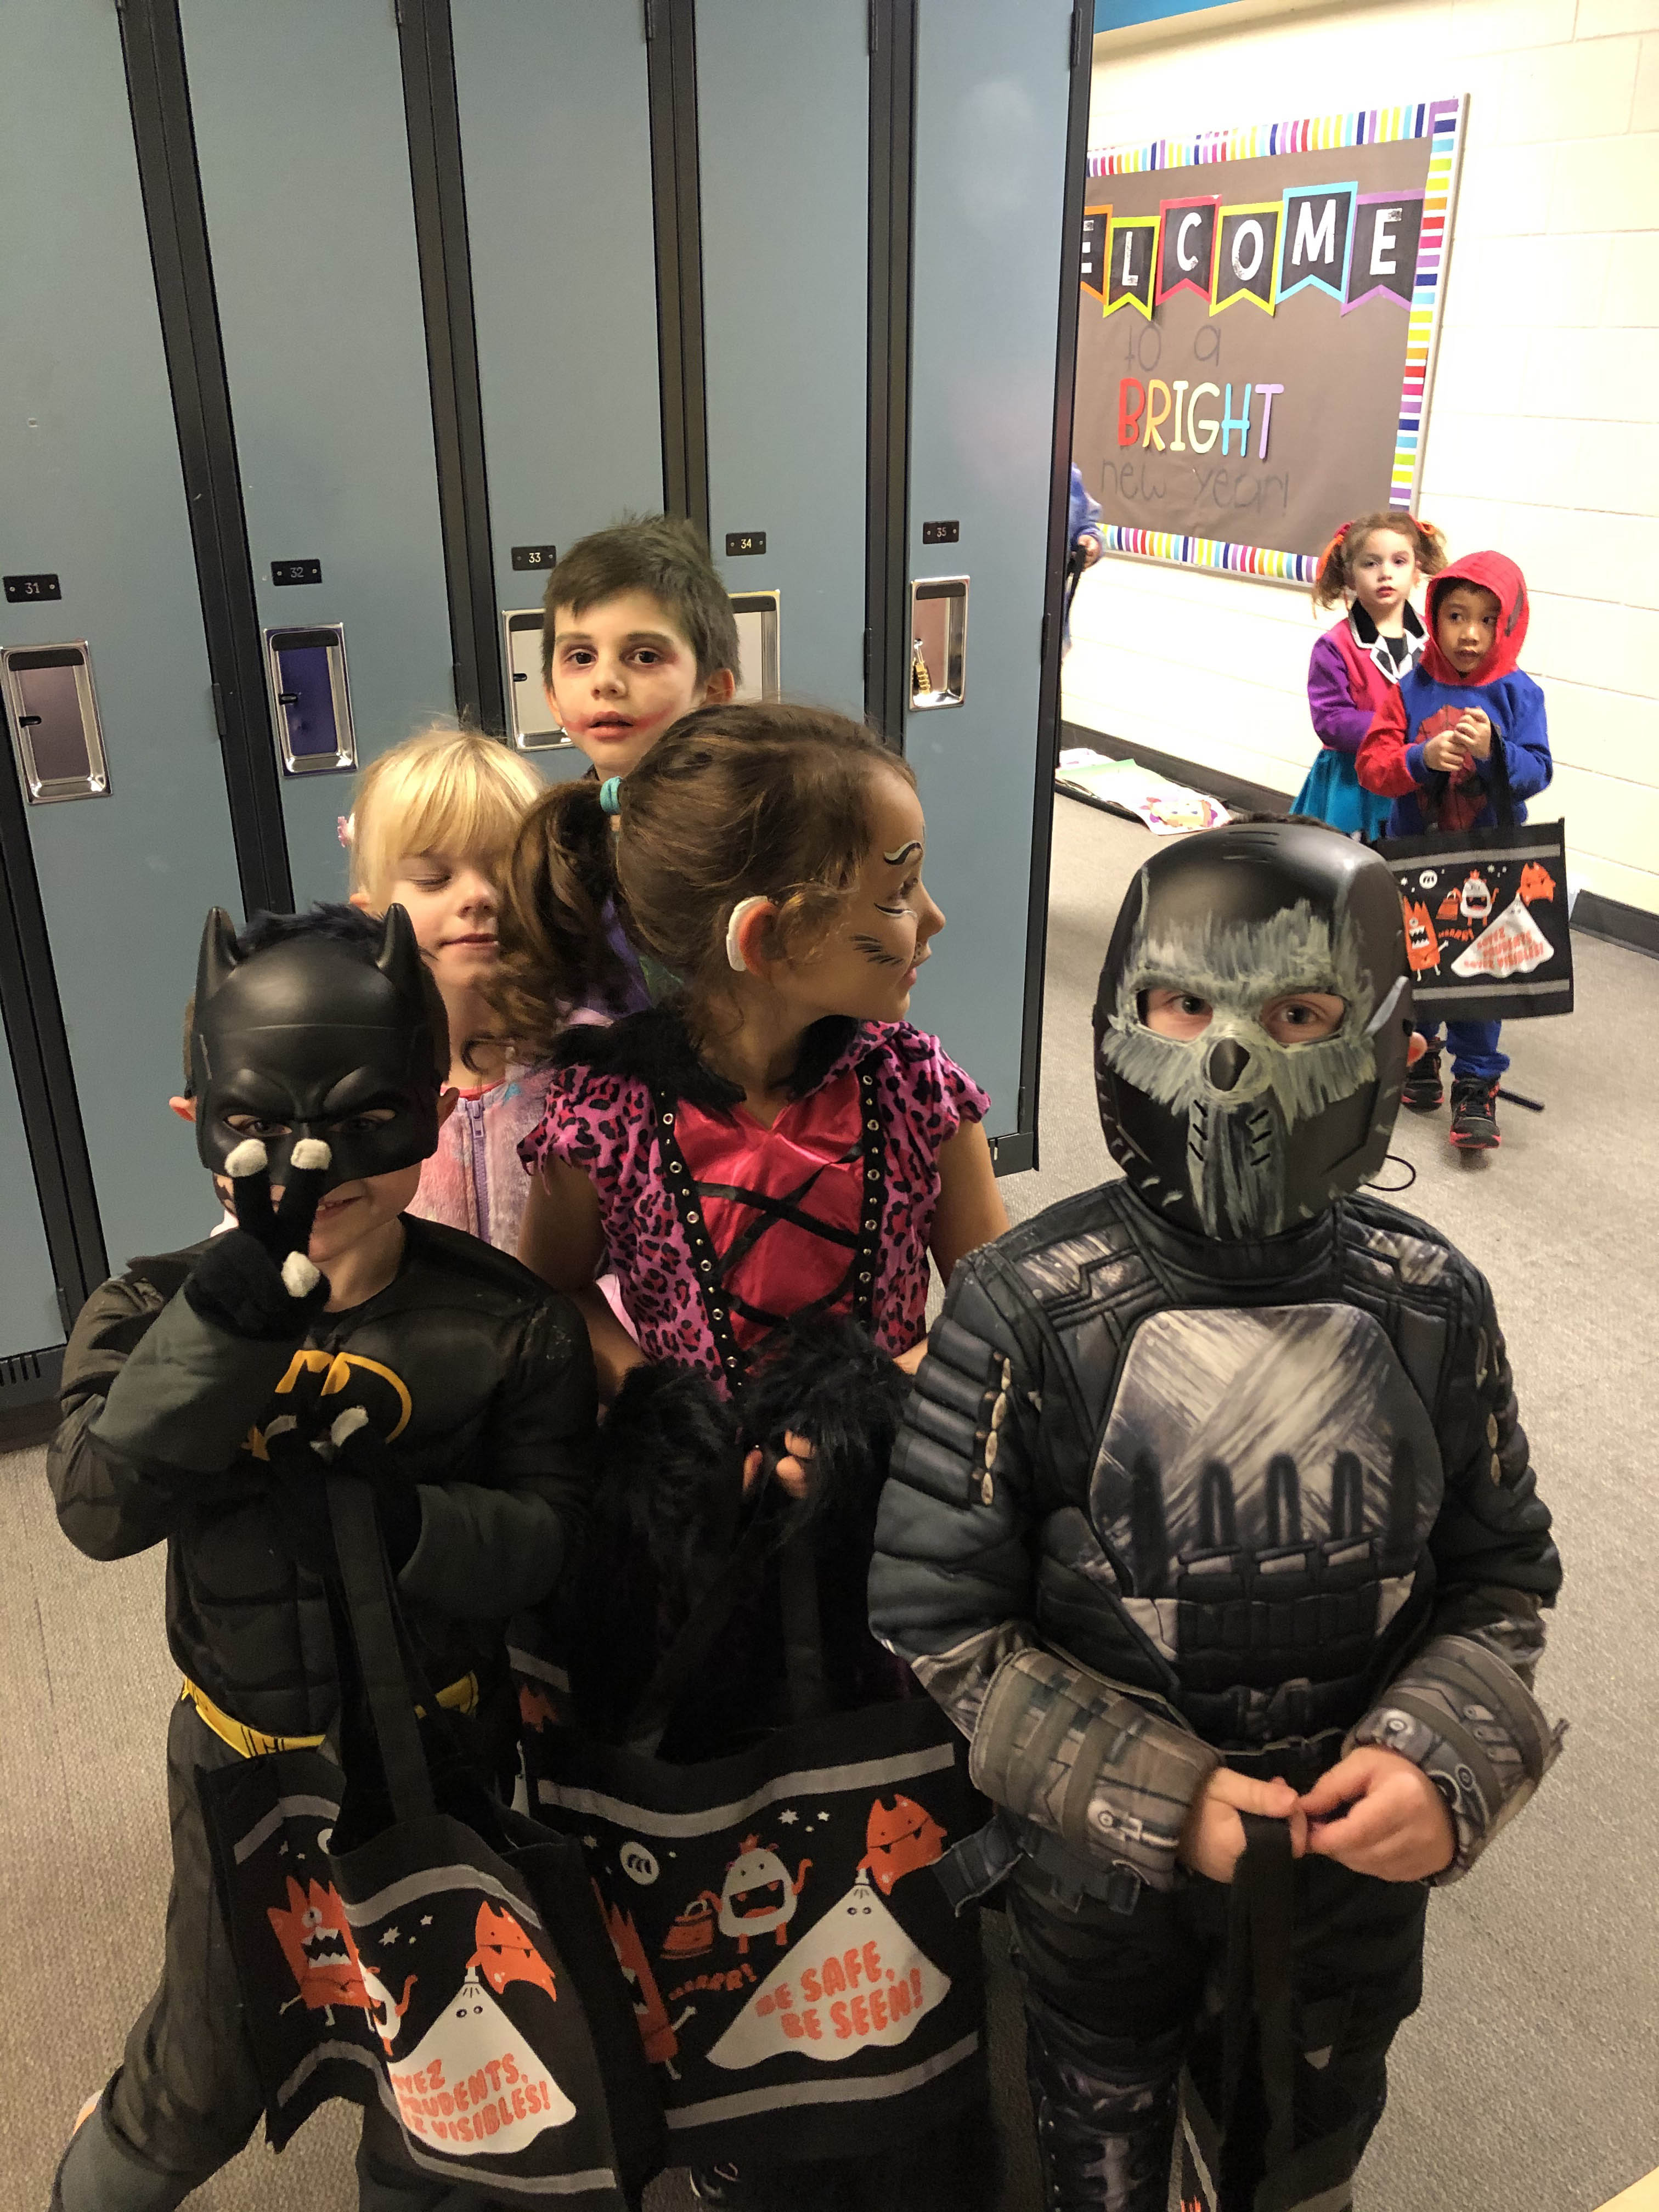 three students in their halloween costumes - batman, jaguar print dress and crossbones